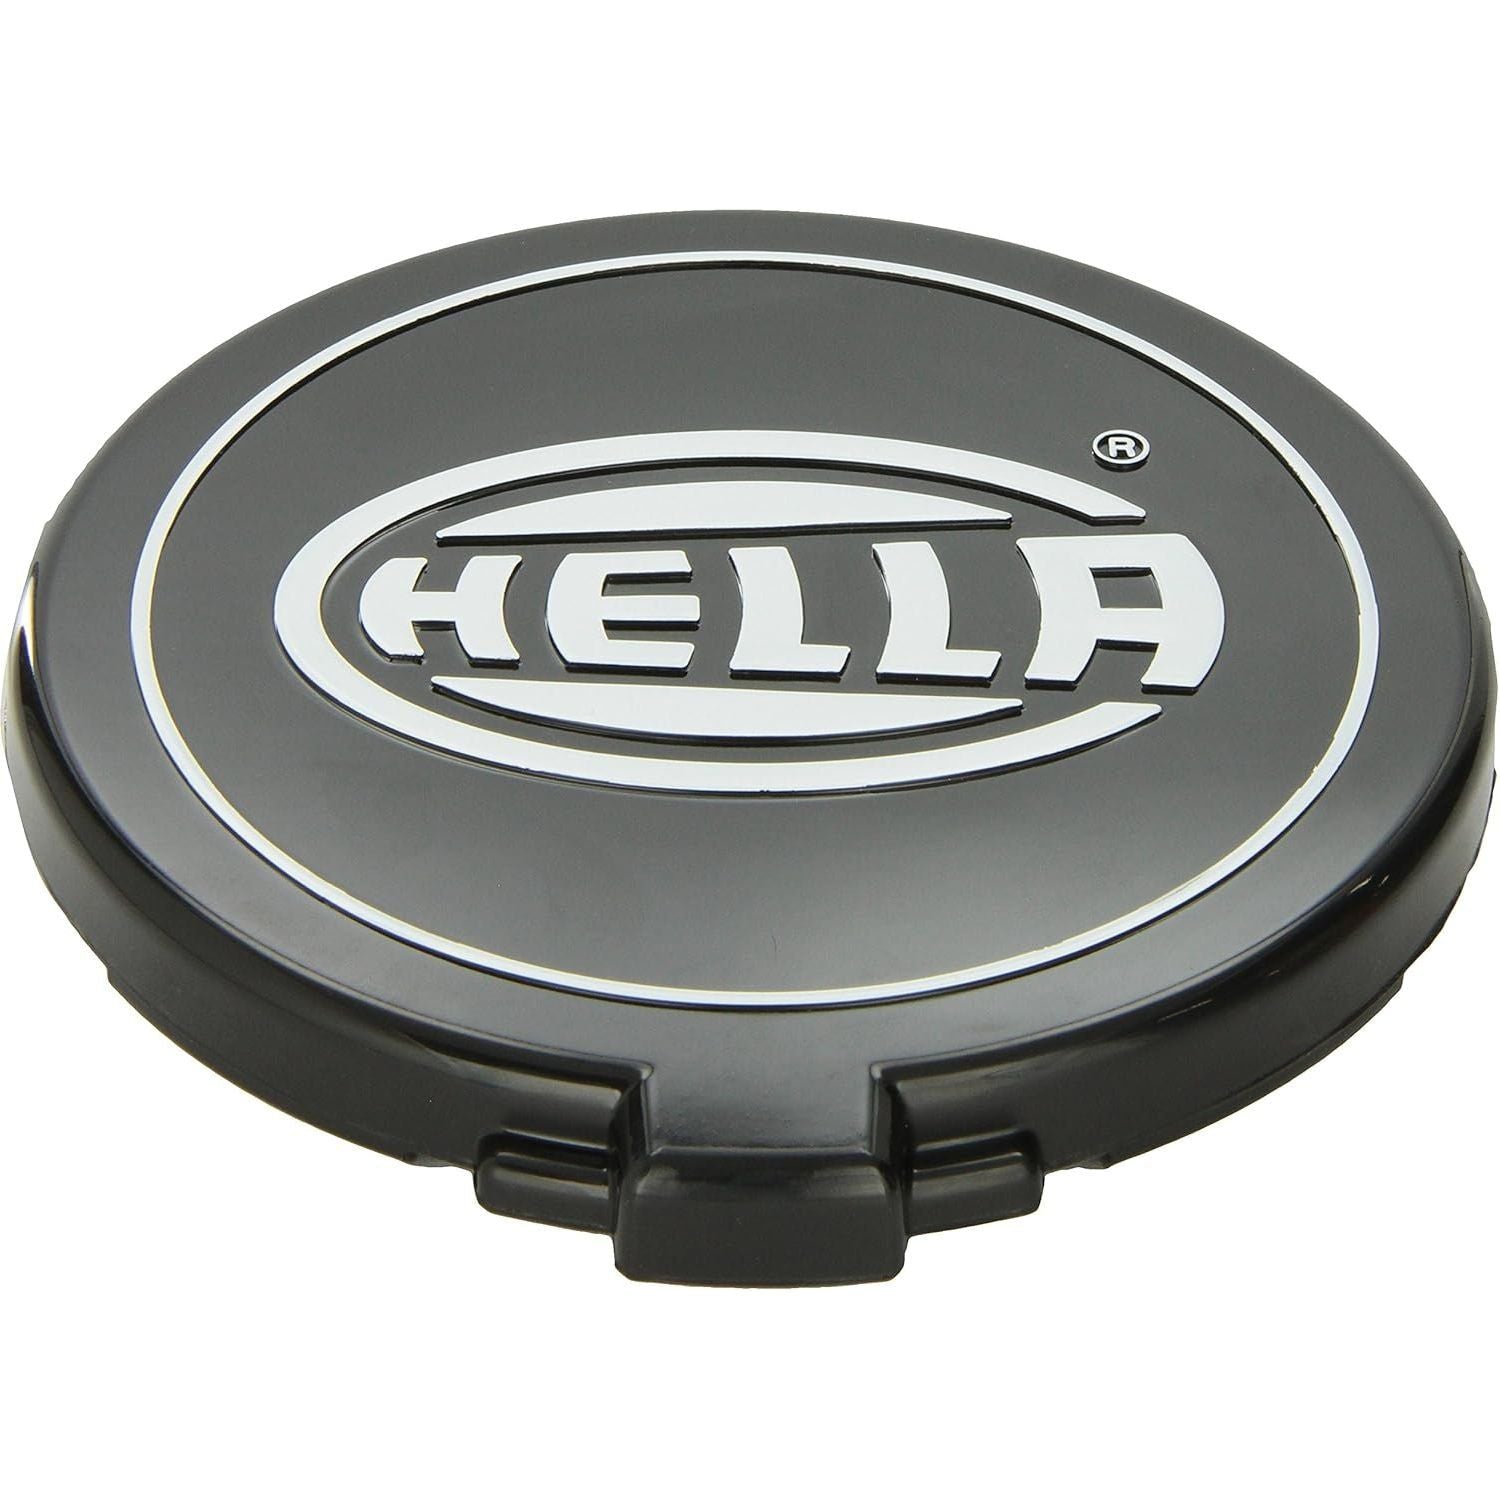 Hella 173146011 500 Series Fog Light Cover 6.4" Round Plastic Black w/ Logo